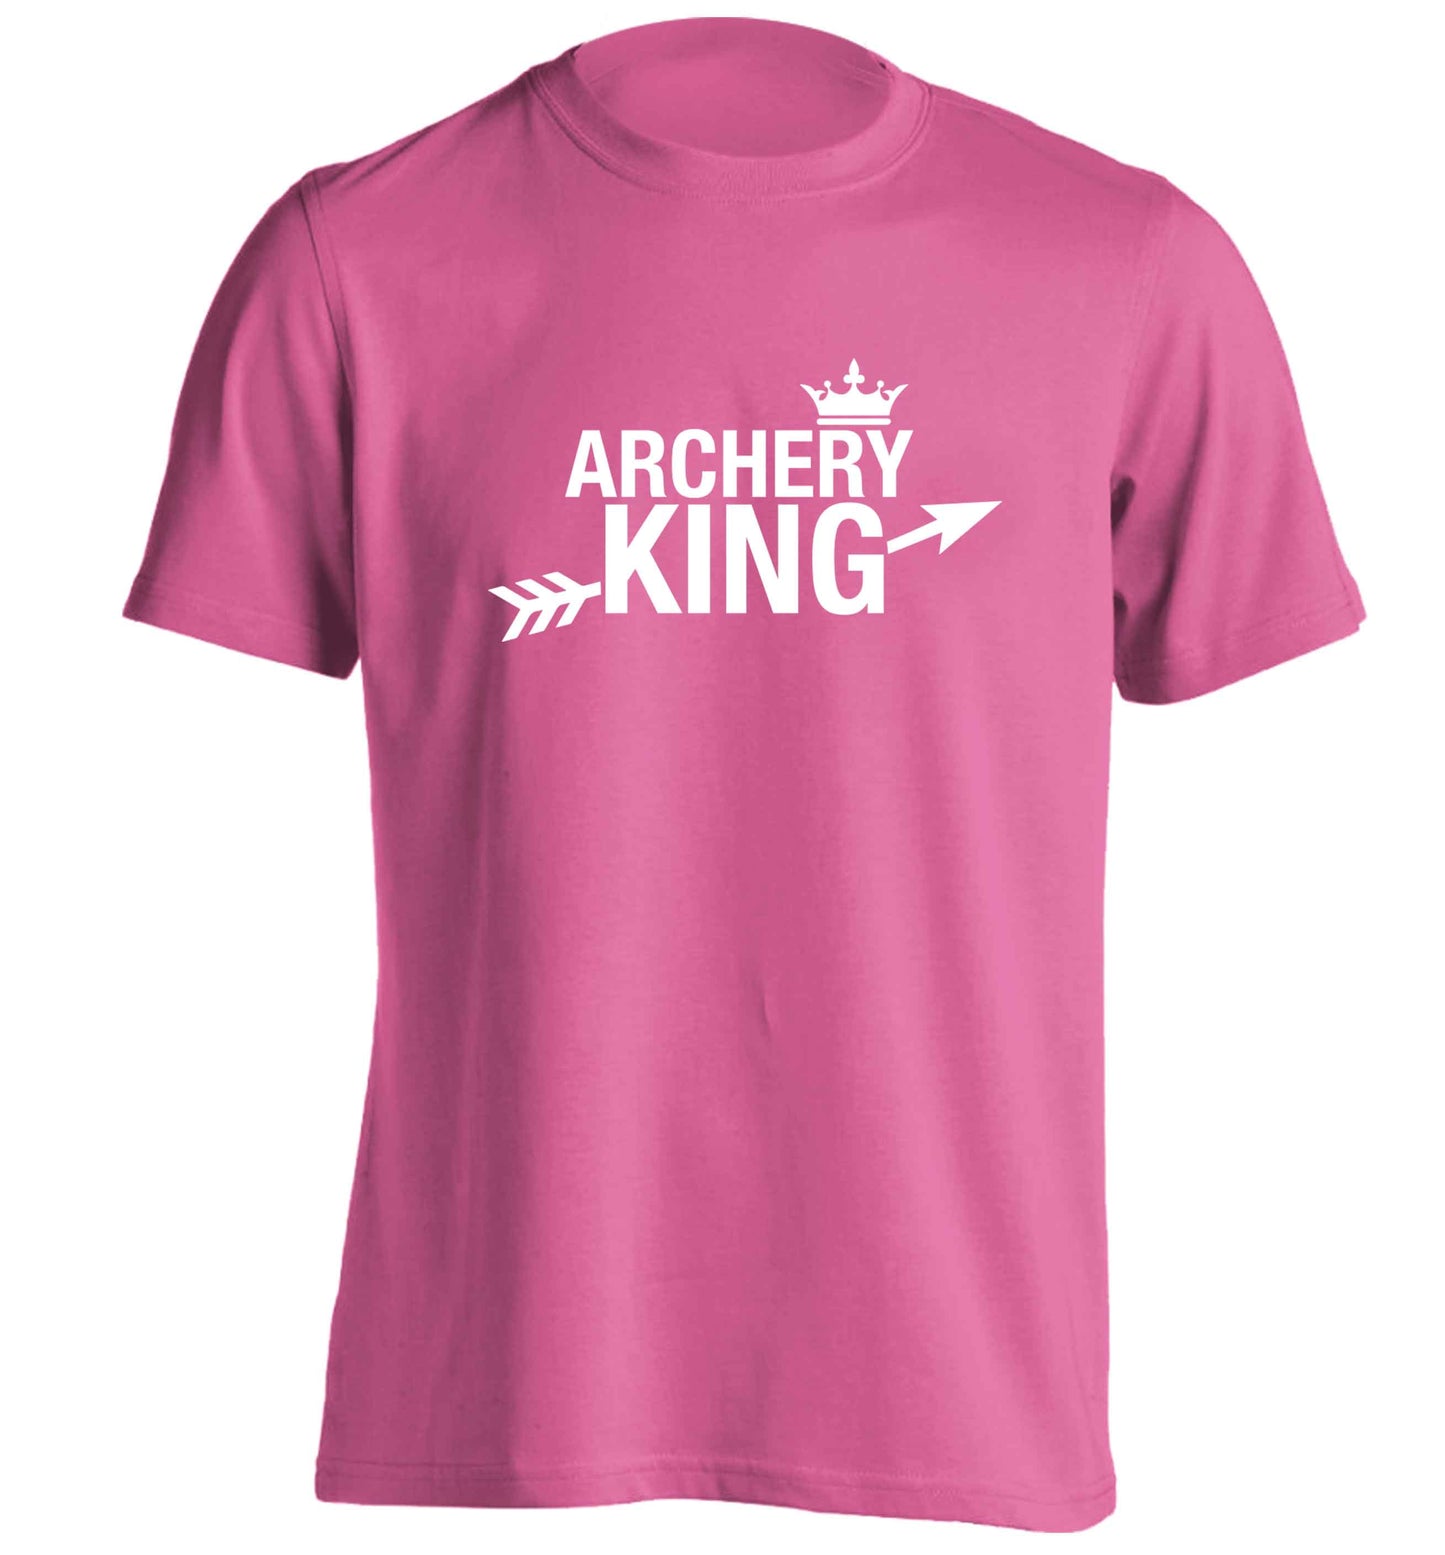 Archery king adults unisex pink Tshirt 2XL